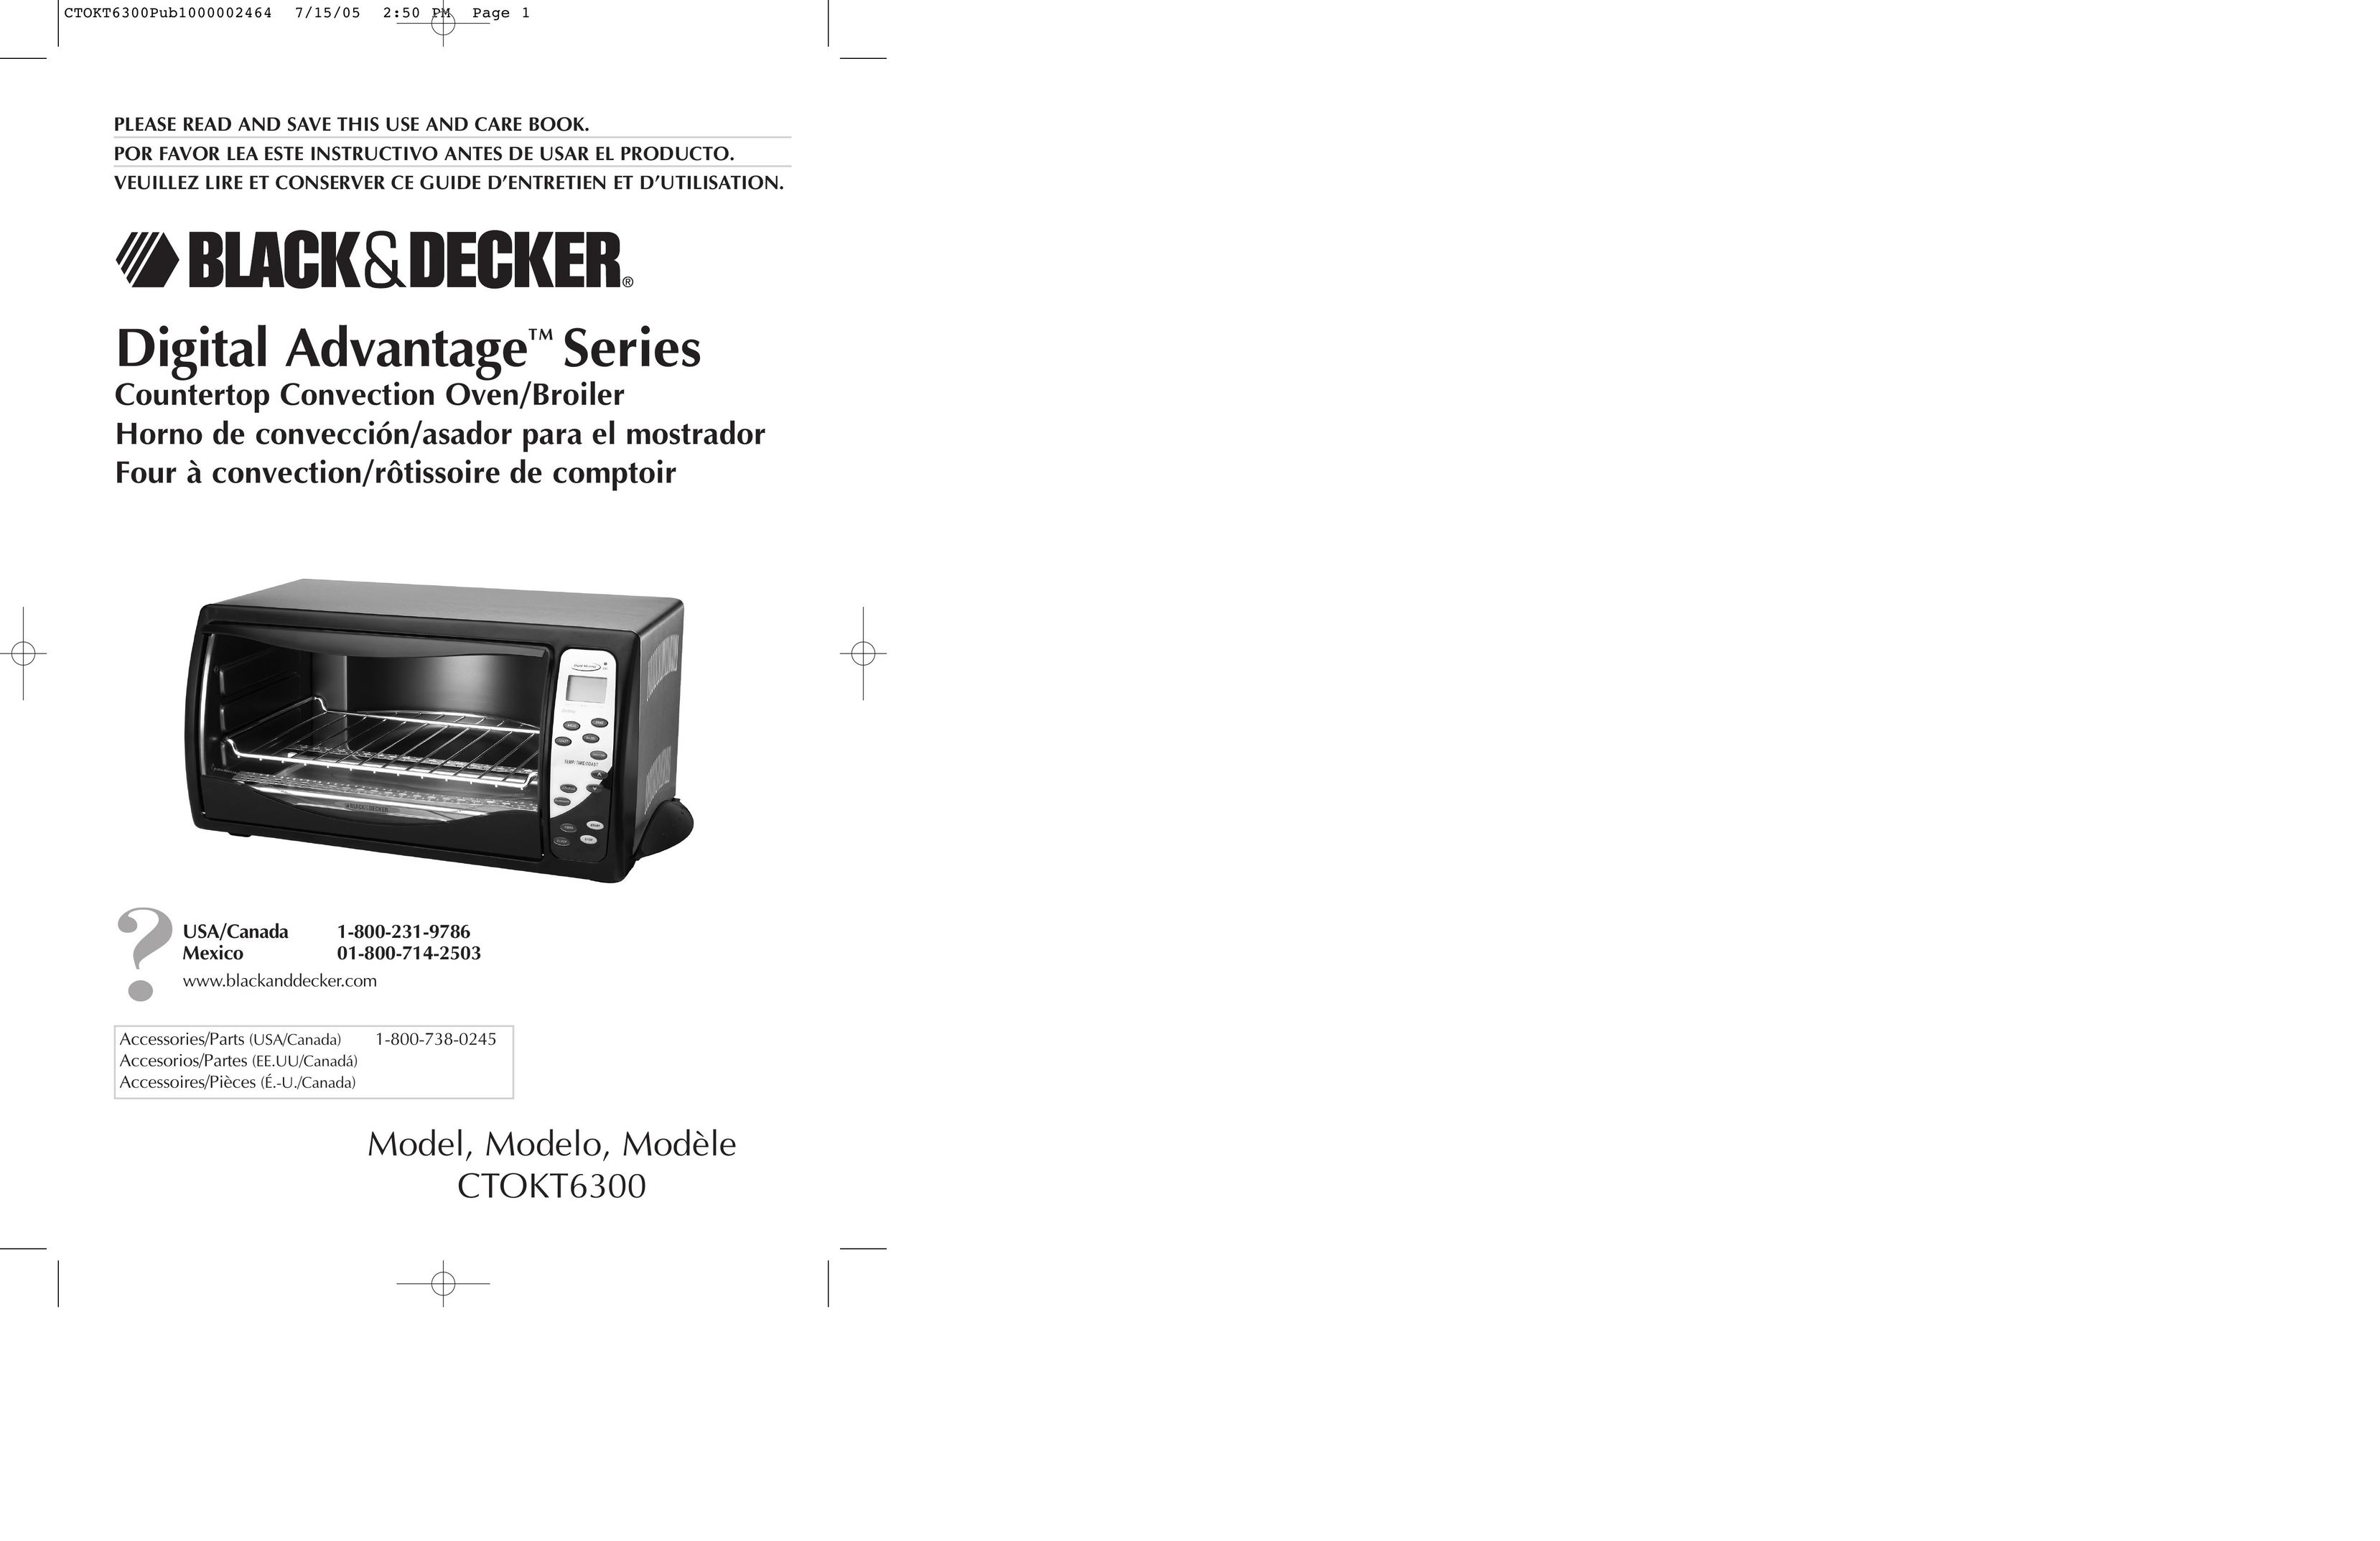 Black & Decker CTOKT6300 Convection Oven User Manual